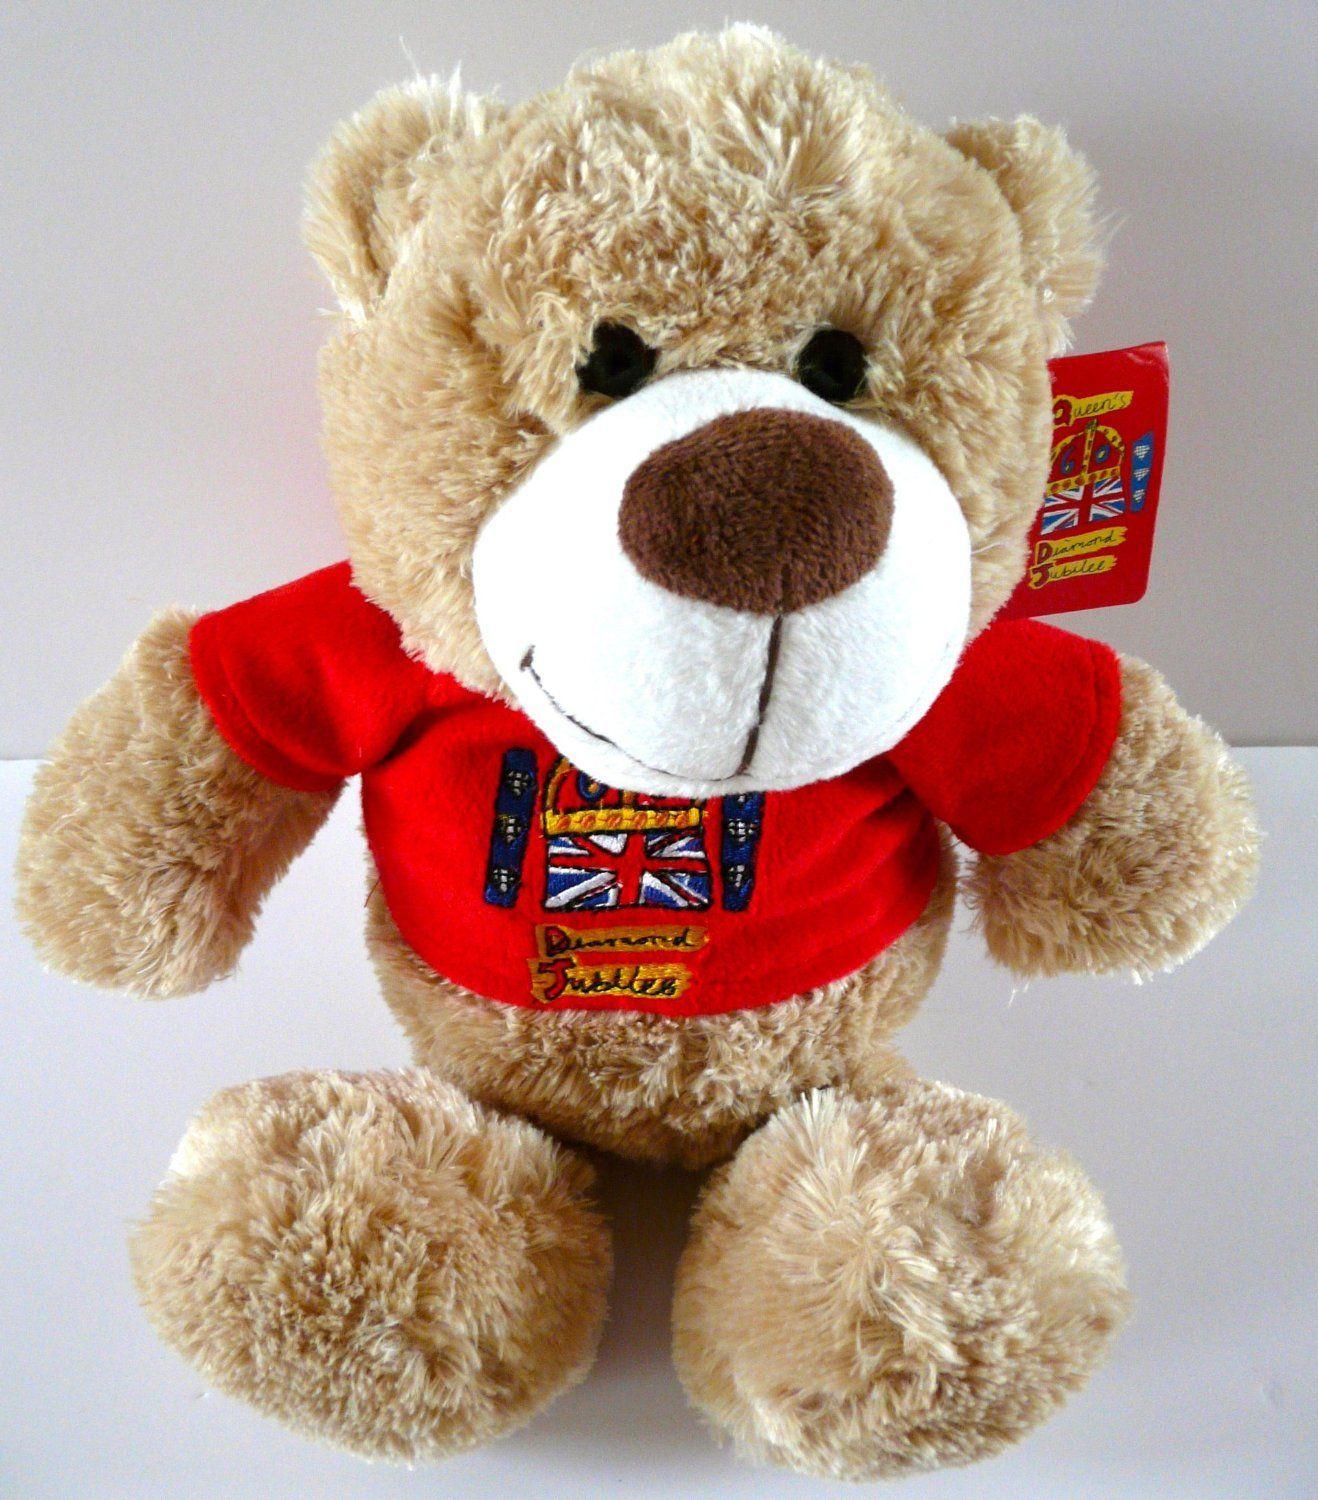 Red and Bear w Logo - Diamond Jubilee 2012 Teddy Bear With Logo Jumper 15cm Tall